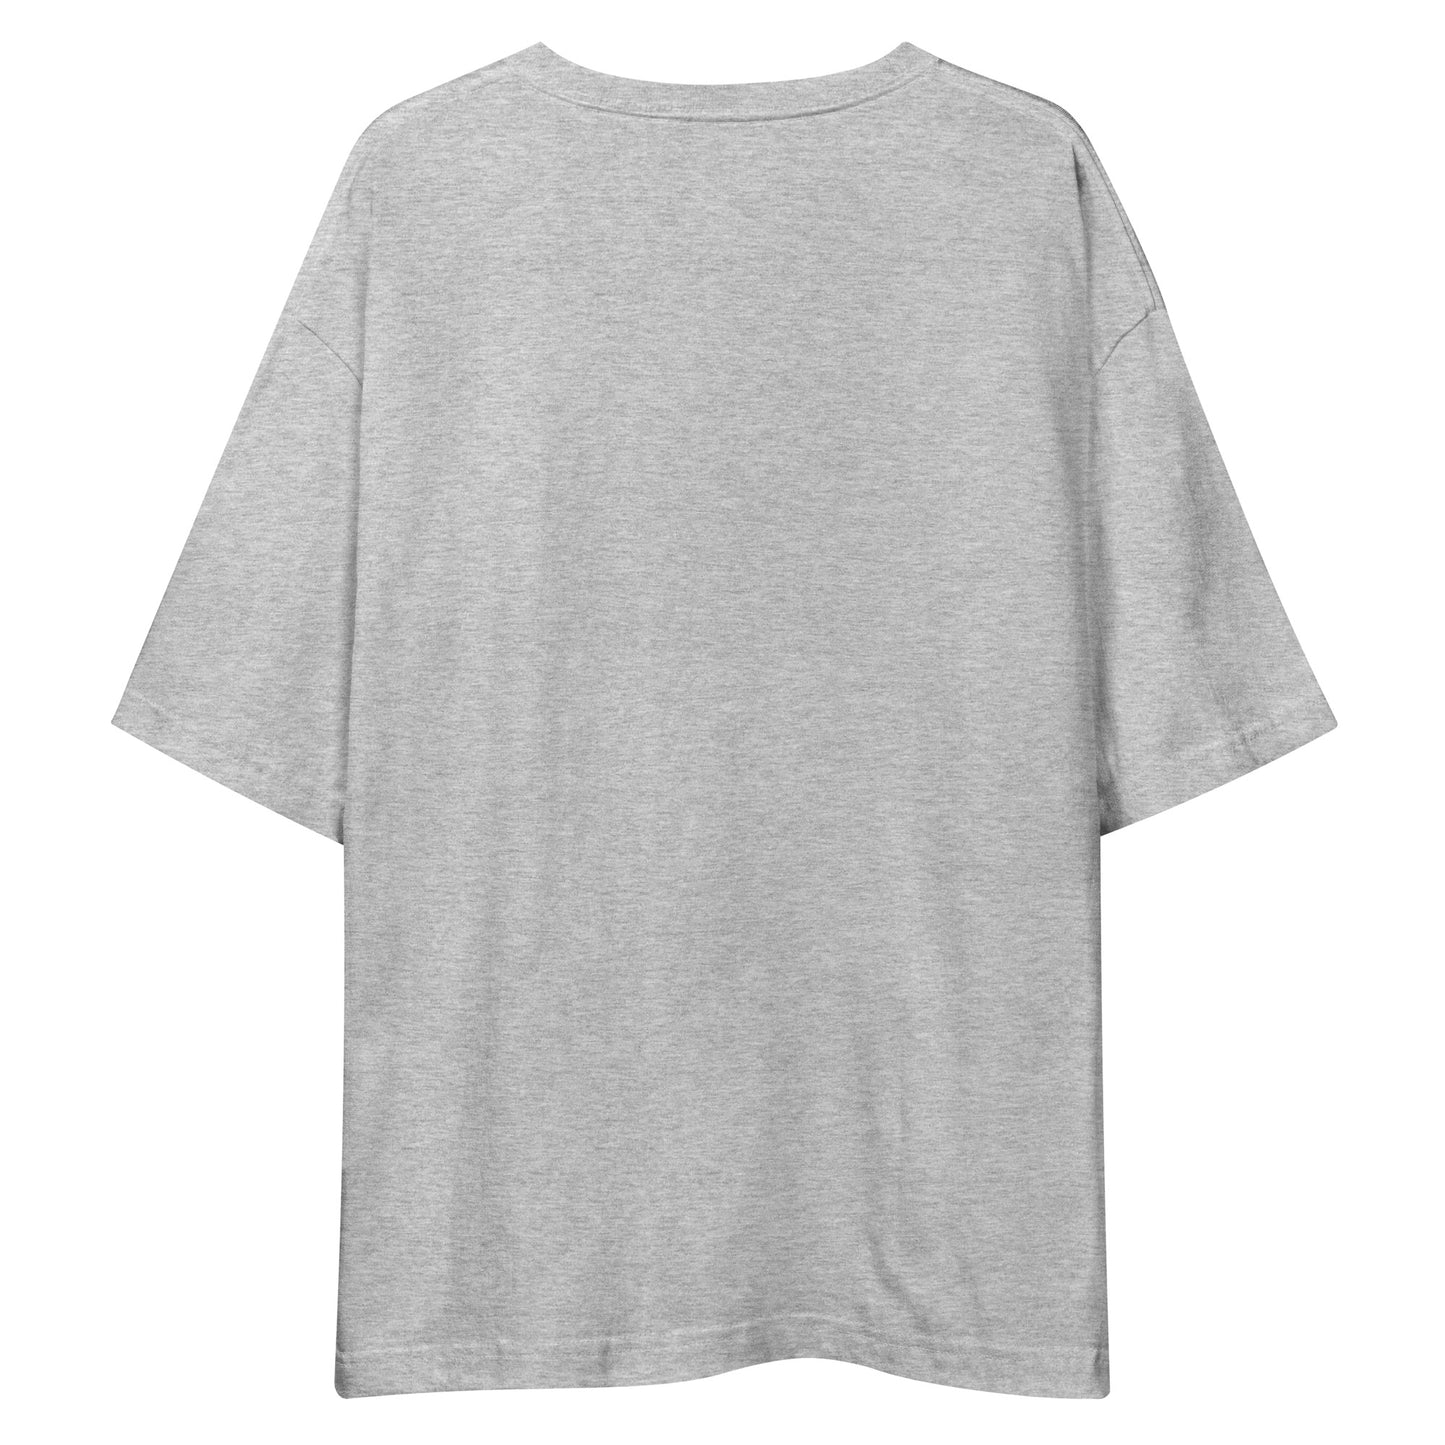 E247 - เสื้อยืด/ภาพเงาใหญ่ (วิบากชนะ/ผู้หญิง : สีเทา/สีเทาชาร์โคล)